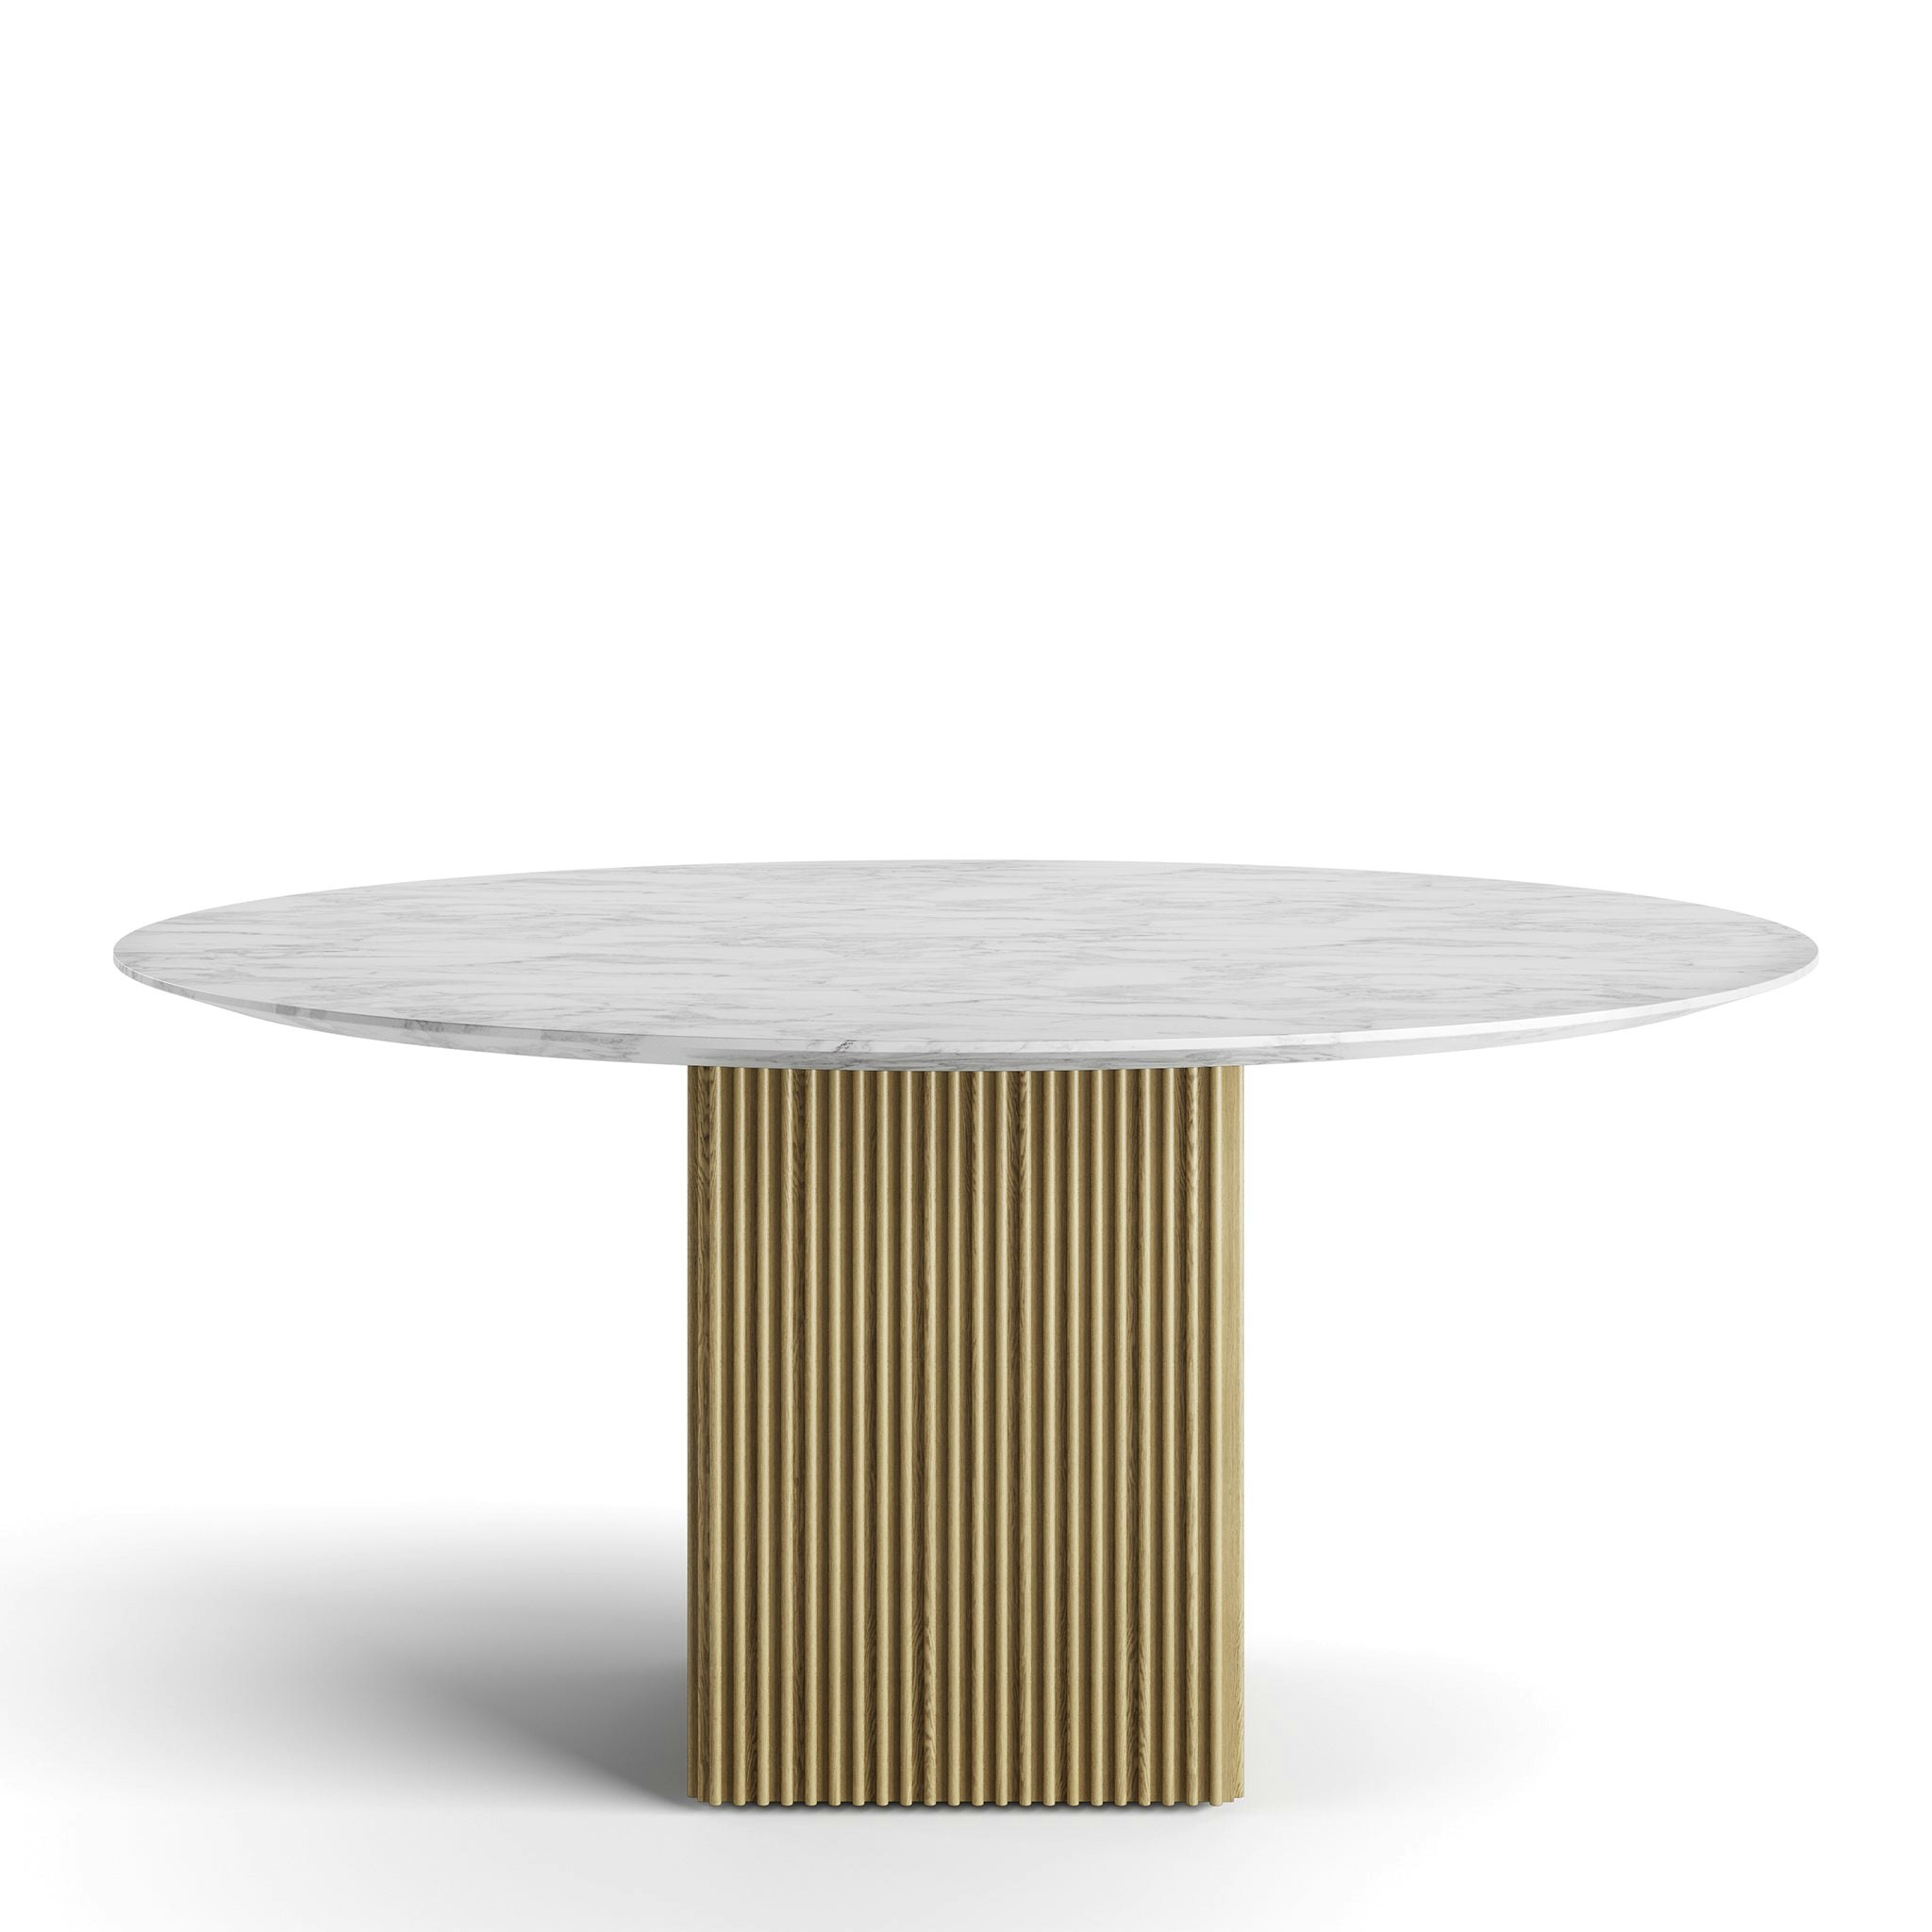 Ten Table Marble by Christian Troels & Jacob Plejdrup for DK3